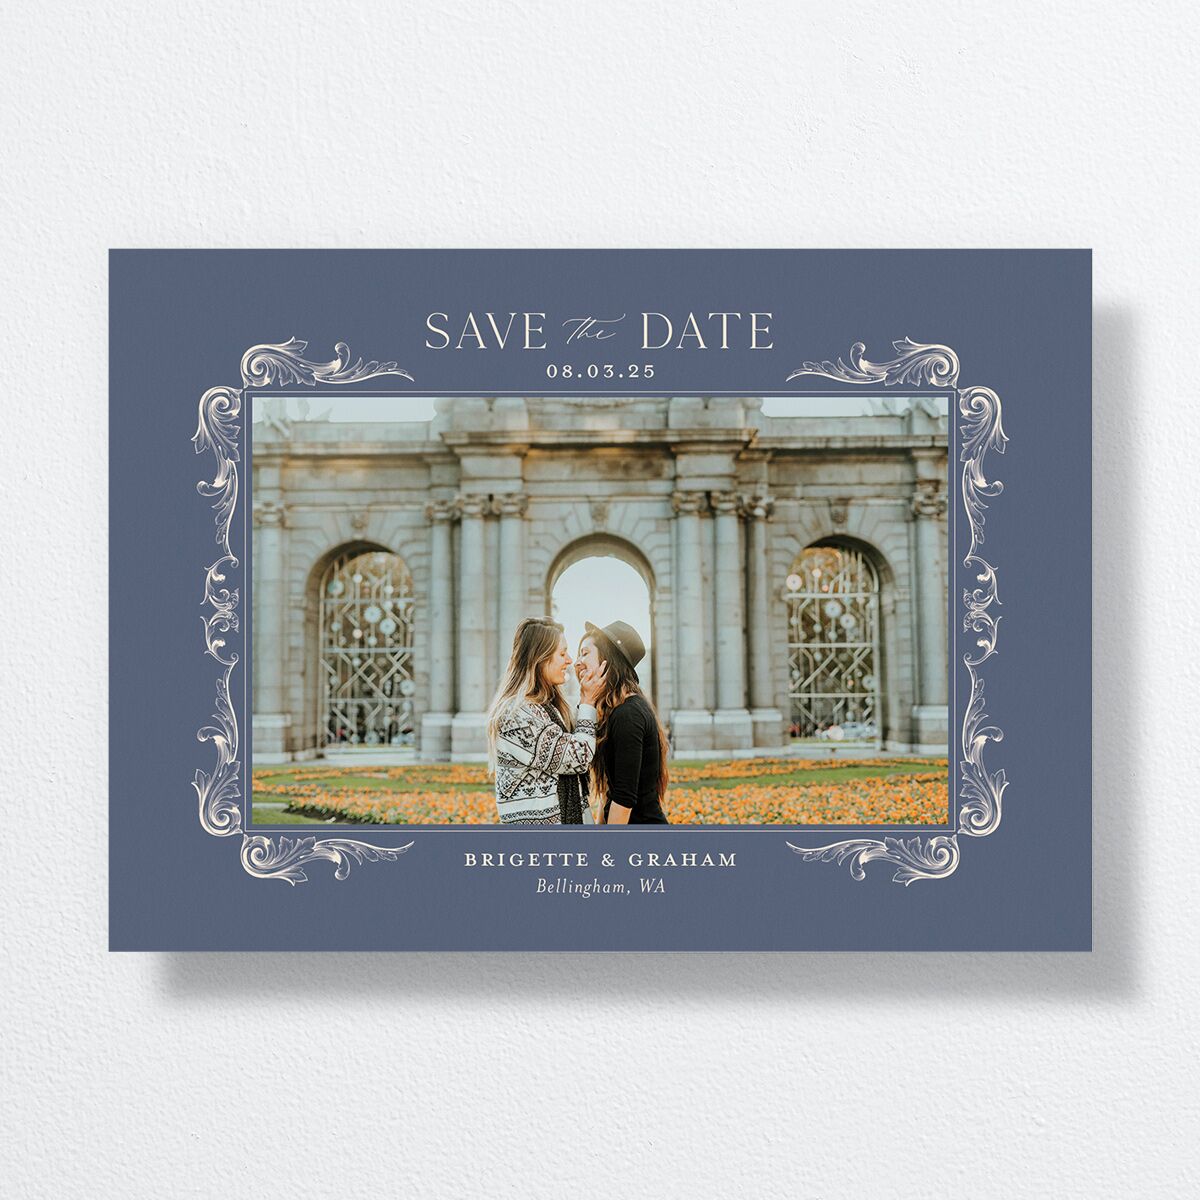 Vintage Ornate Frame Save The Date Cards front